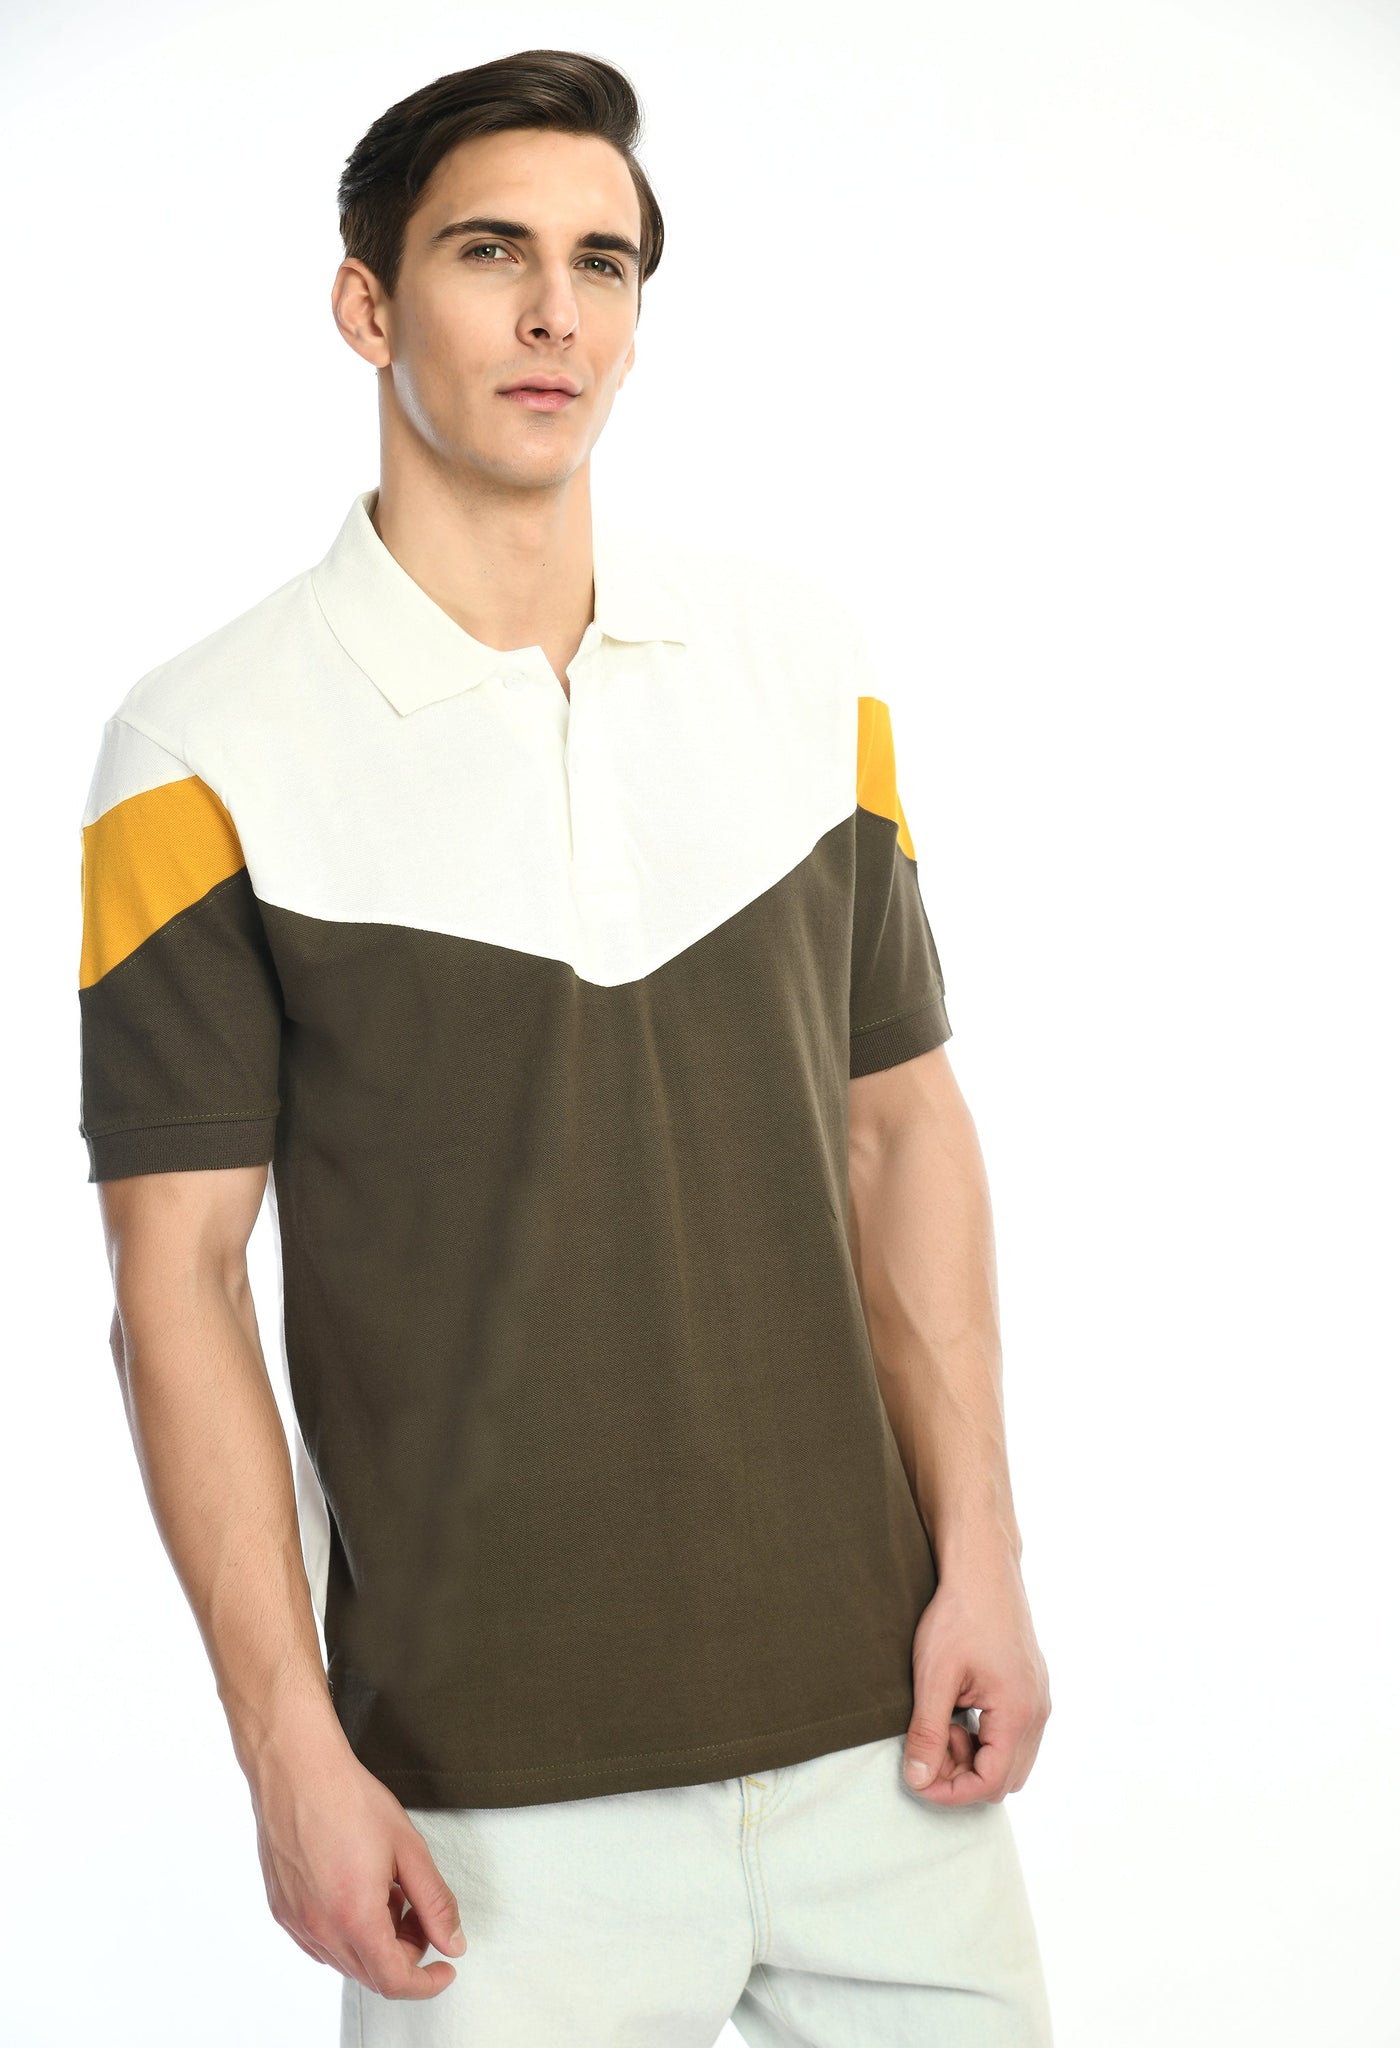 Men's Color Blocked Polo T-shirt